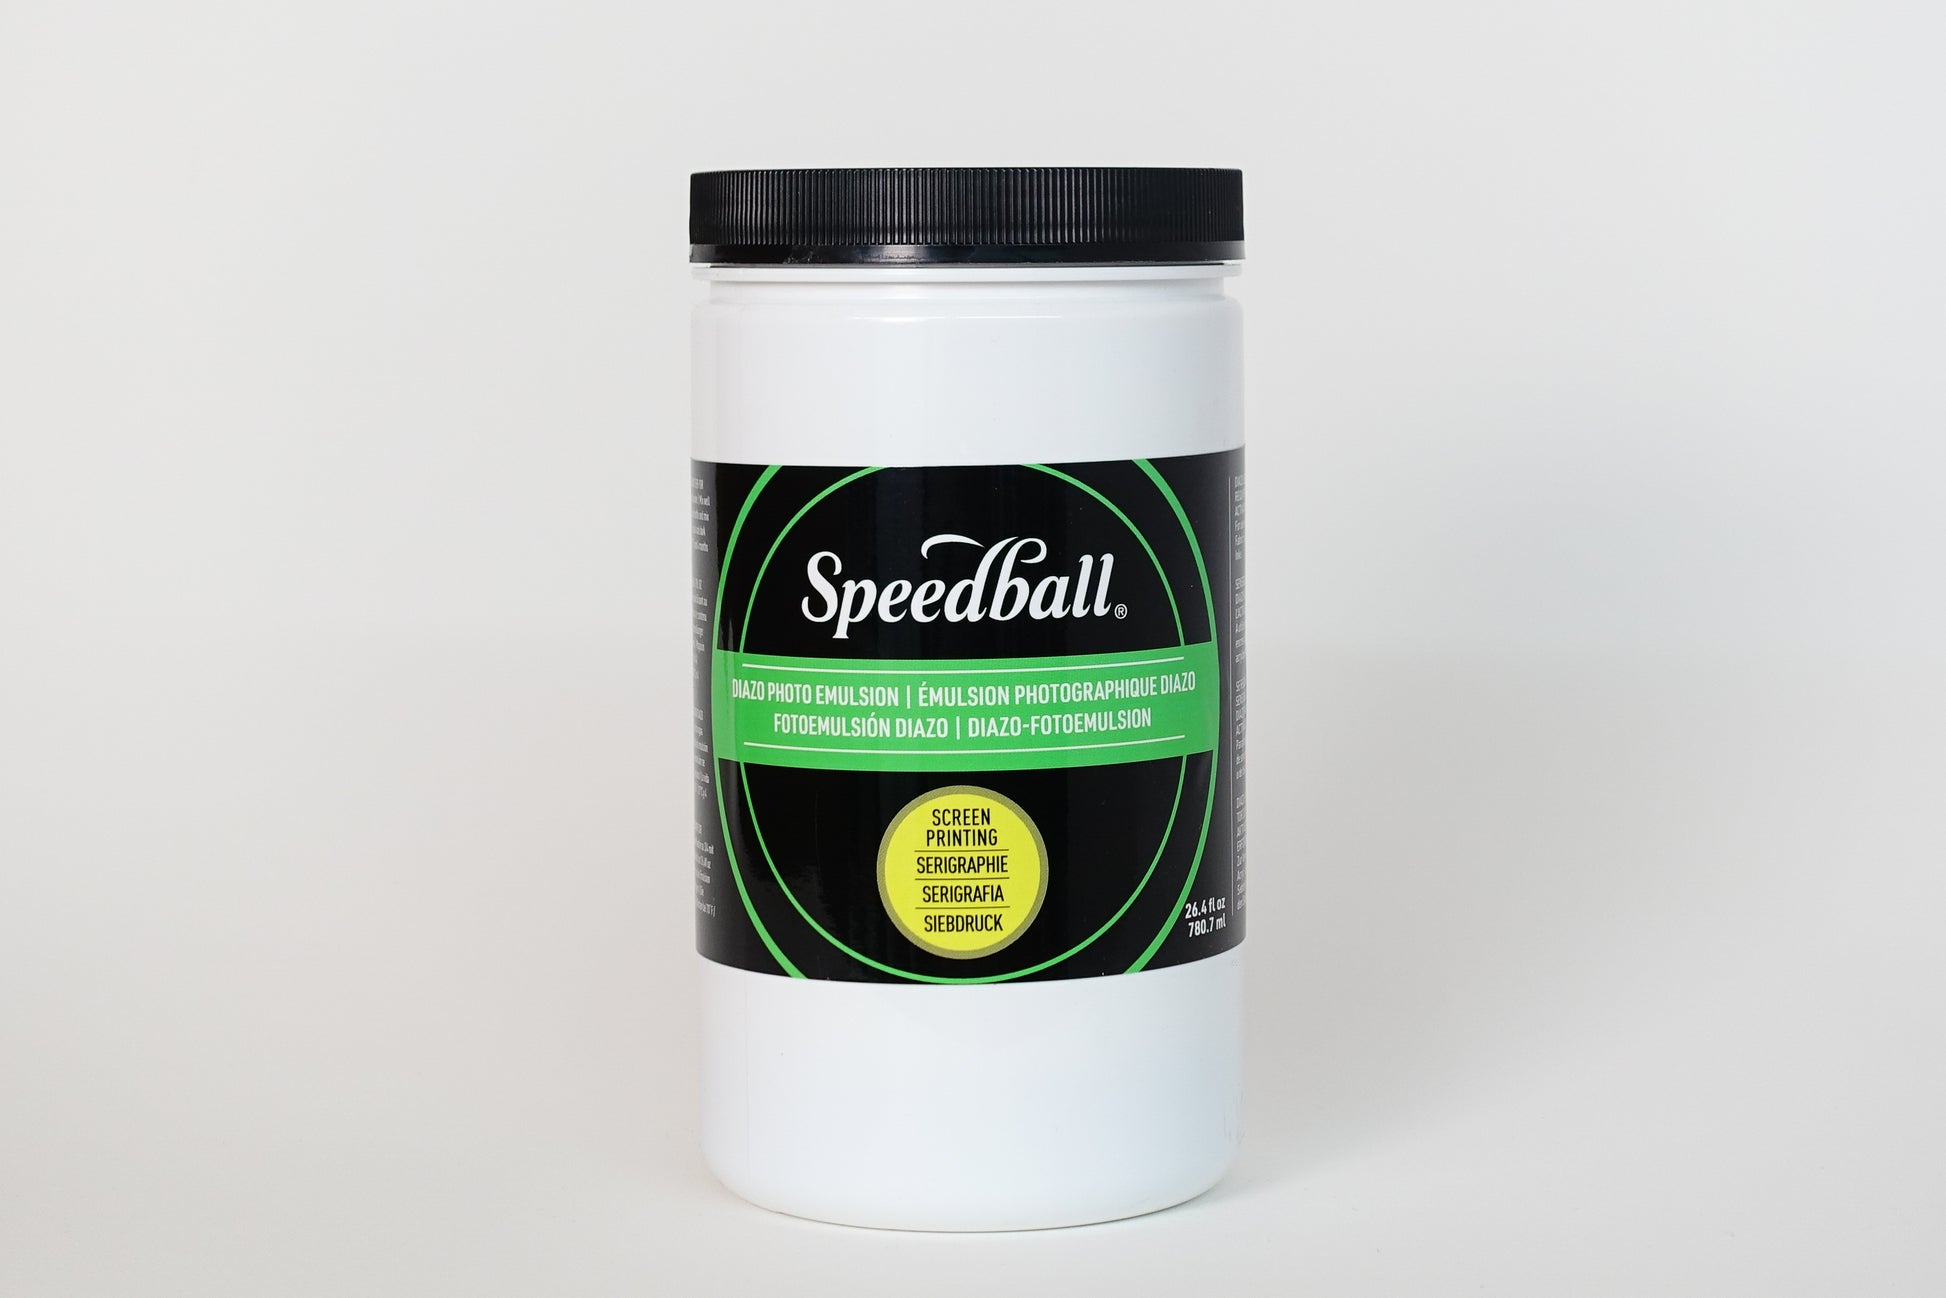 Speedball 26.4 oz. Diazo Photo Emulsion